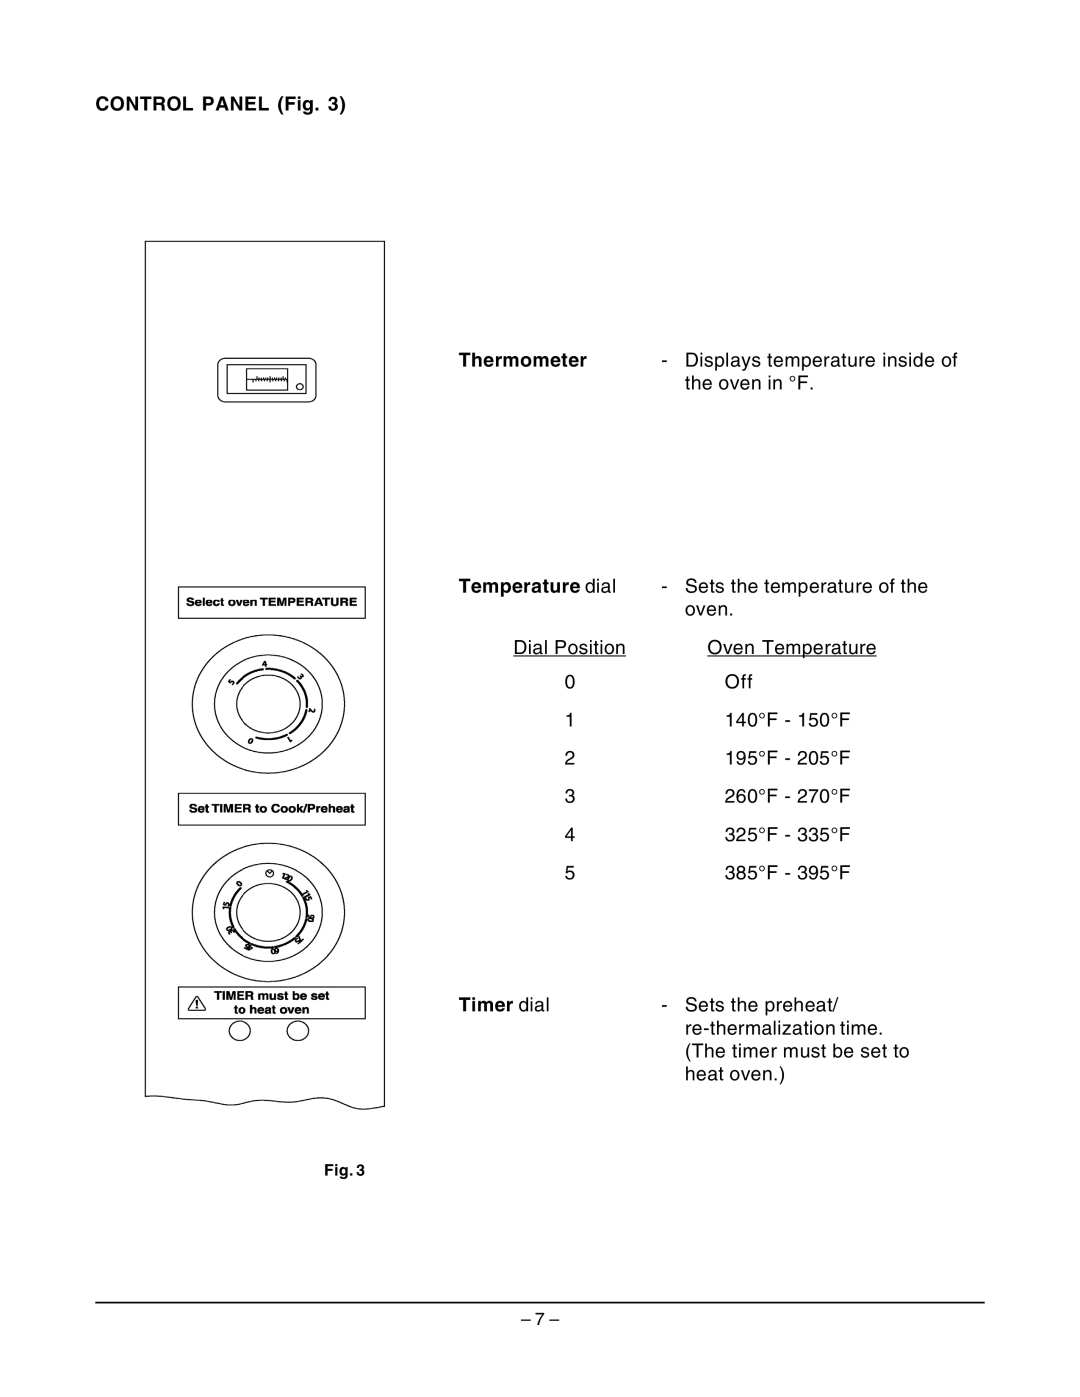 Hobart ML-132064 manual CONTROL PANEL Fig, Temperature dial, Timer dial 